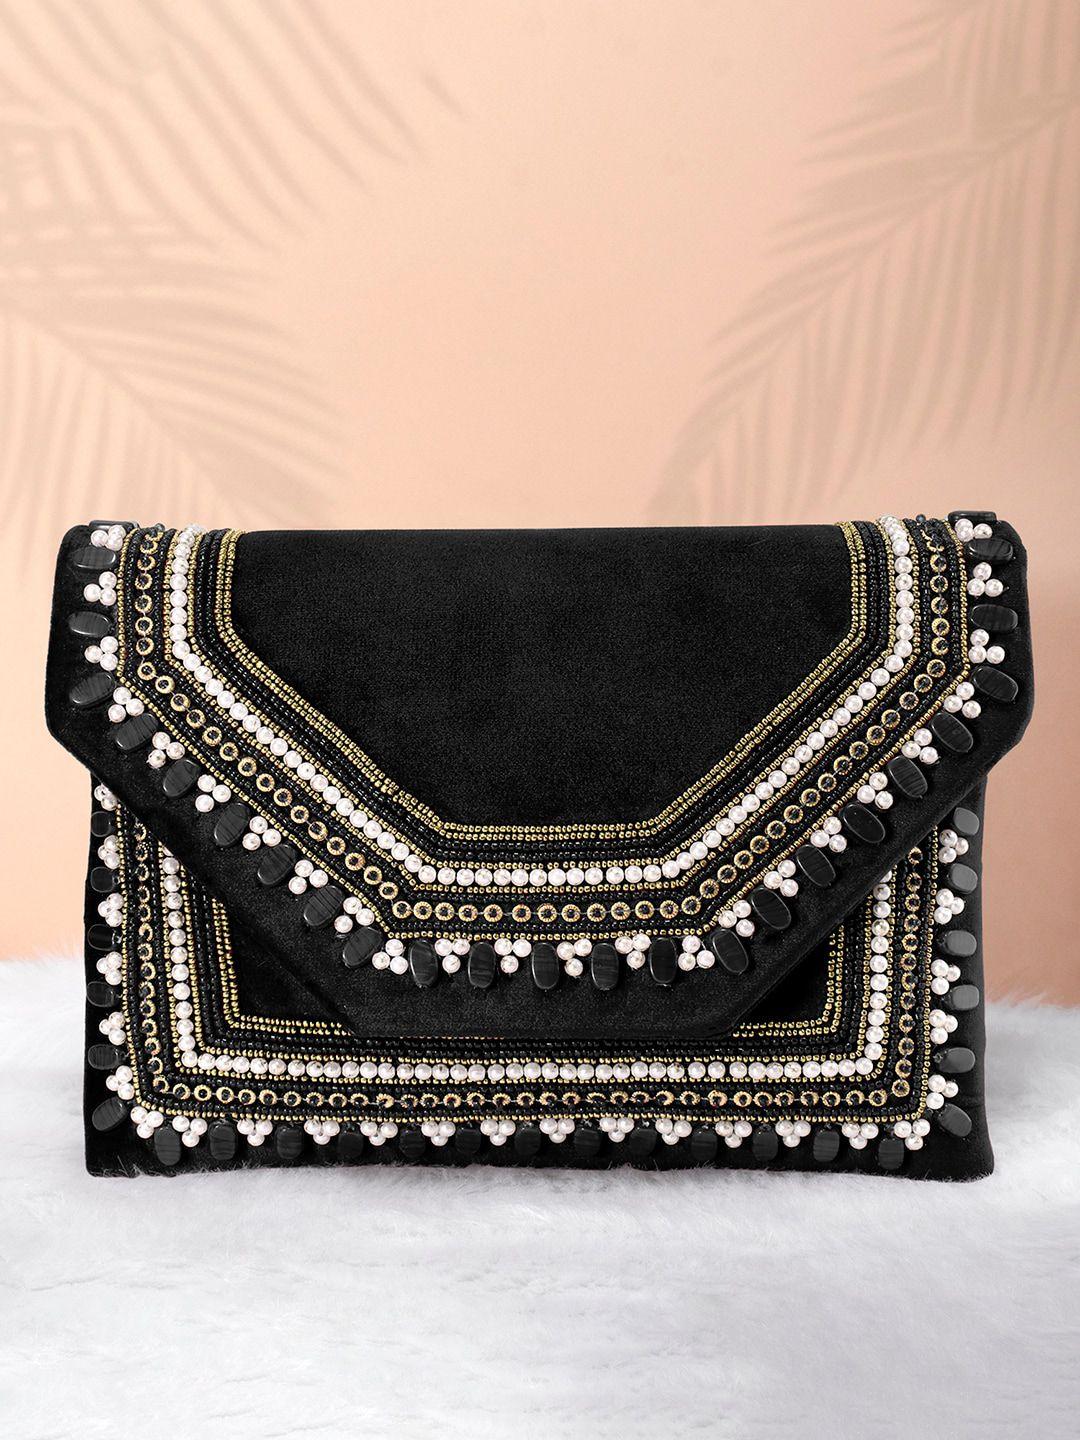 peora black & white embellished purse clutch